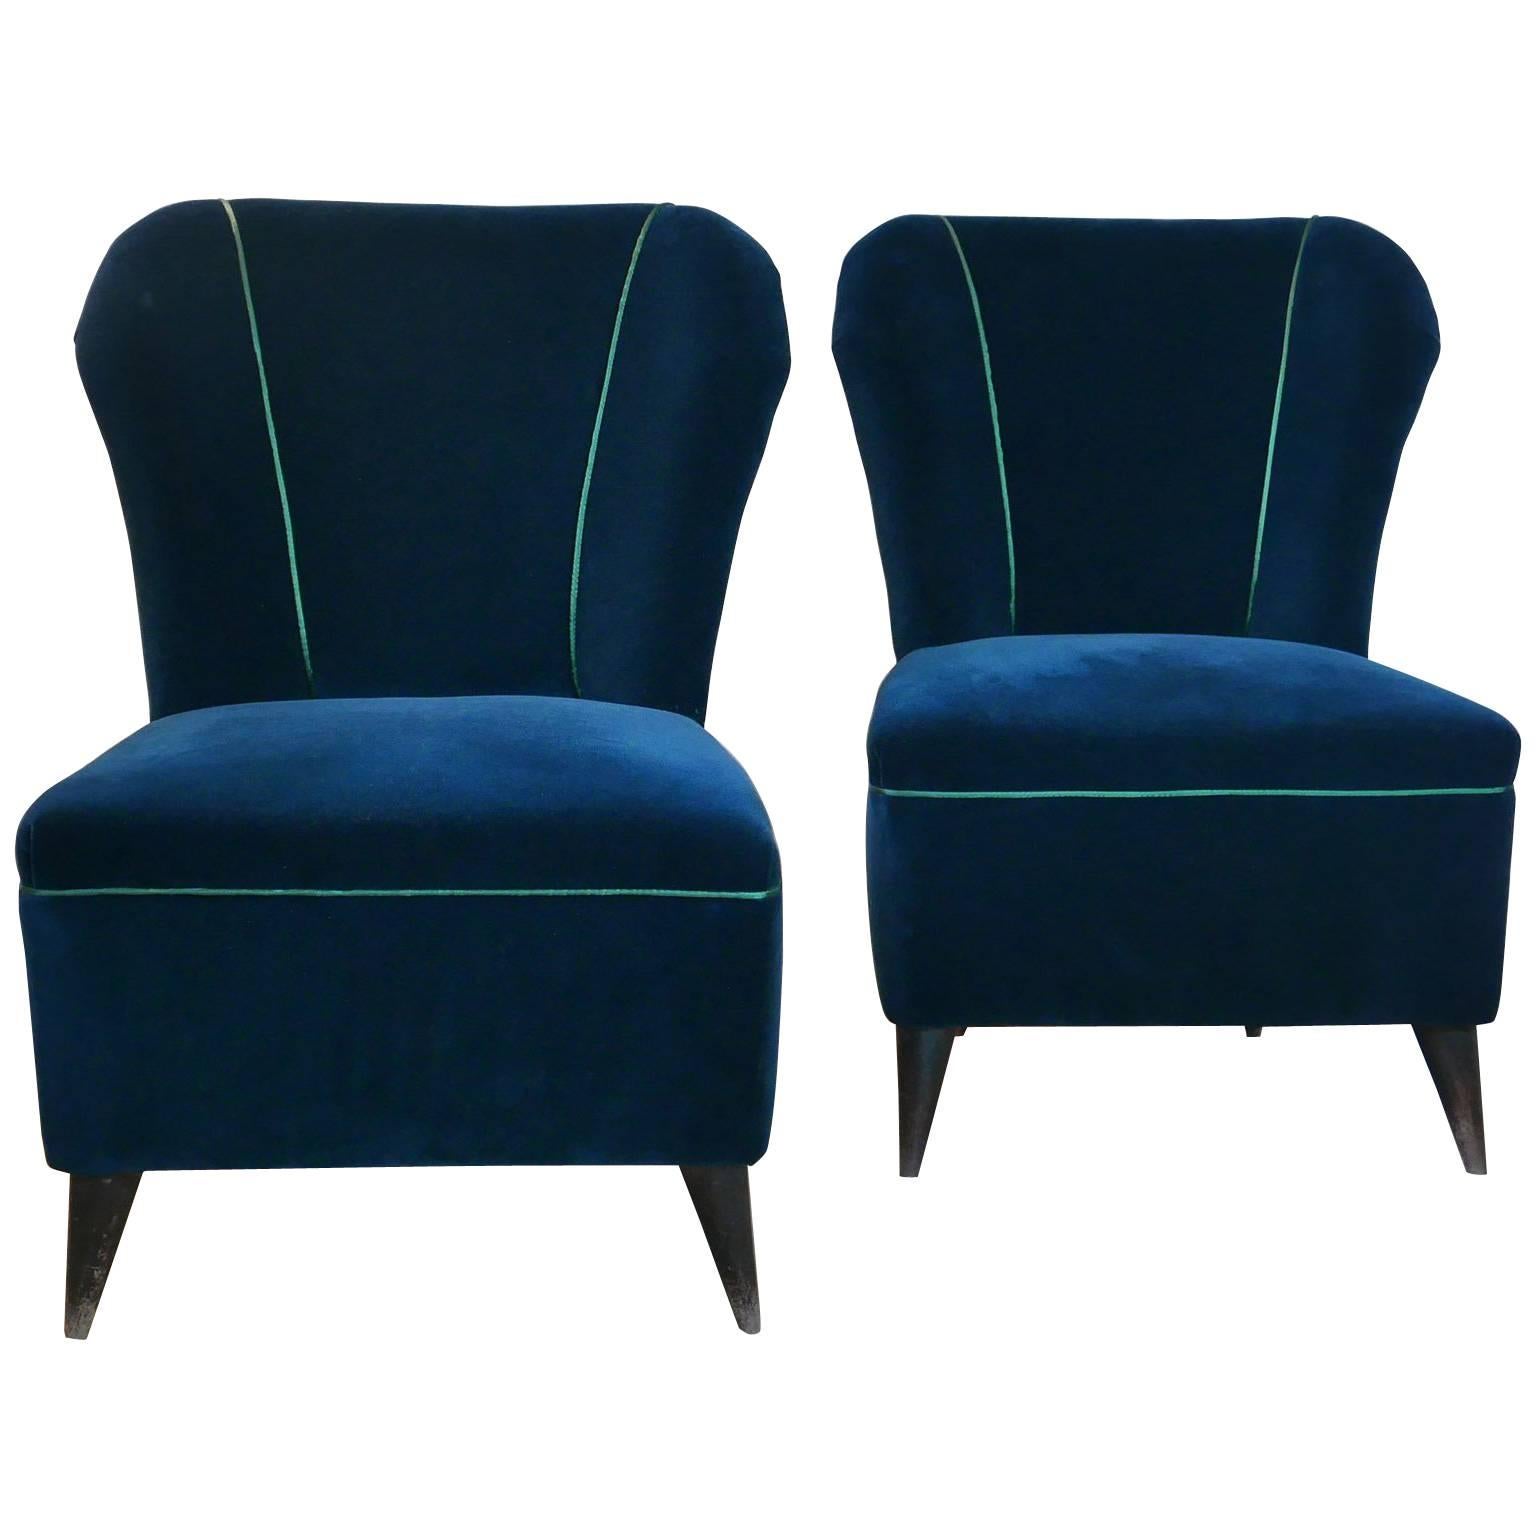 Pair of Enchanting Midcentury Armchairs  by ISA  in Green Velvet,  Italy 1950s